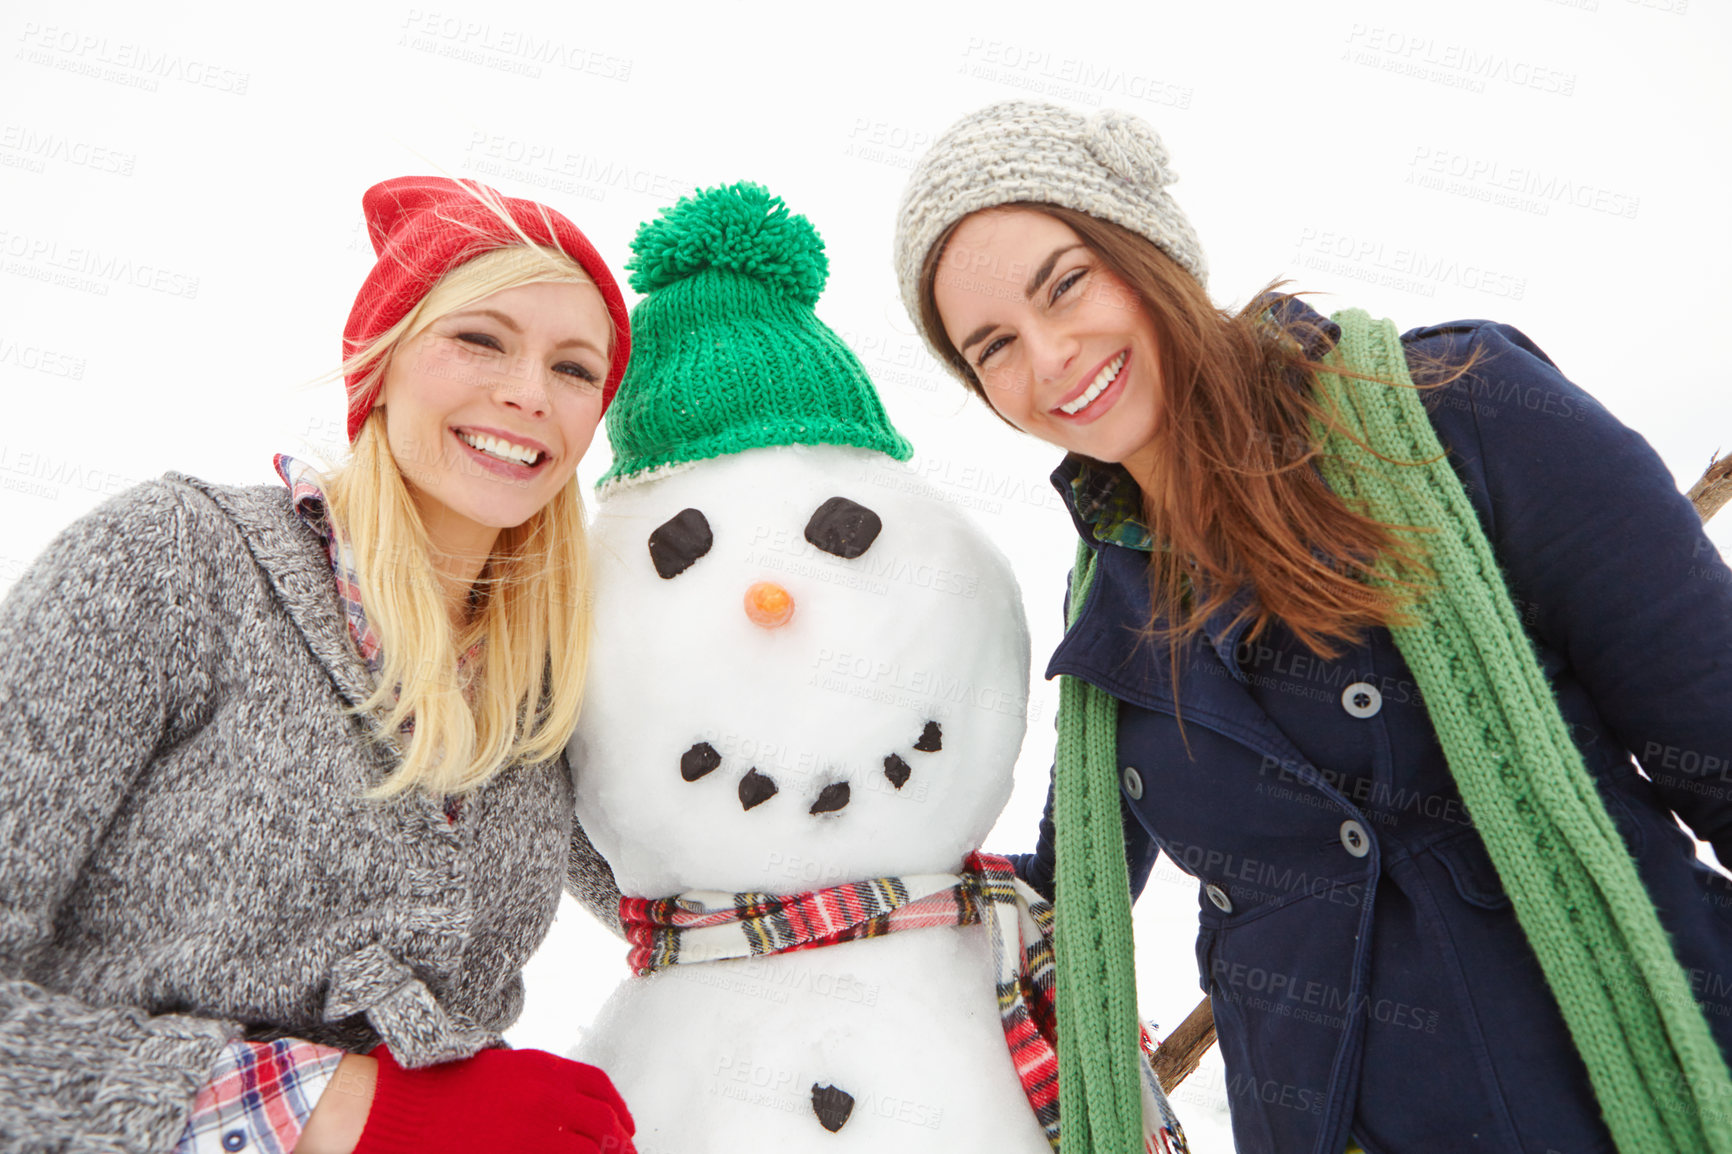 Buy stock photo Cropped shot of two beautiful young women standing beside a snowman